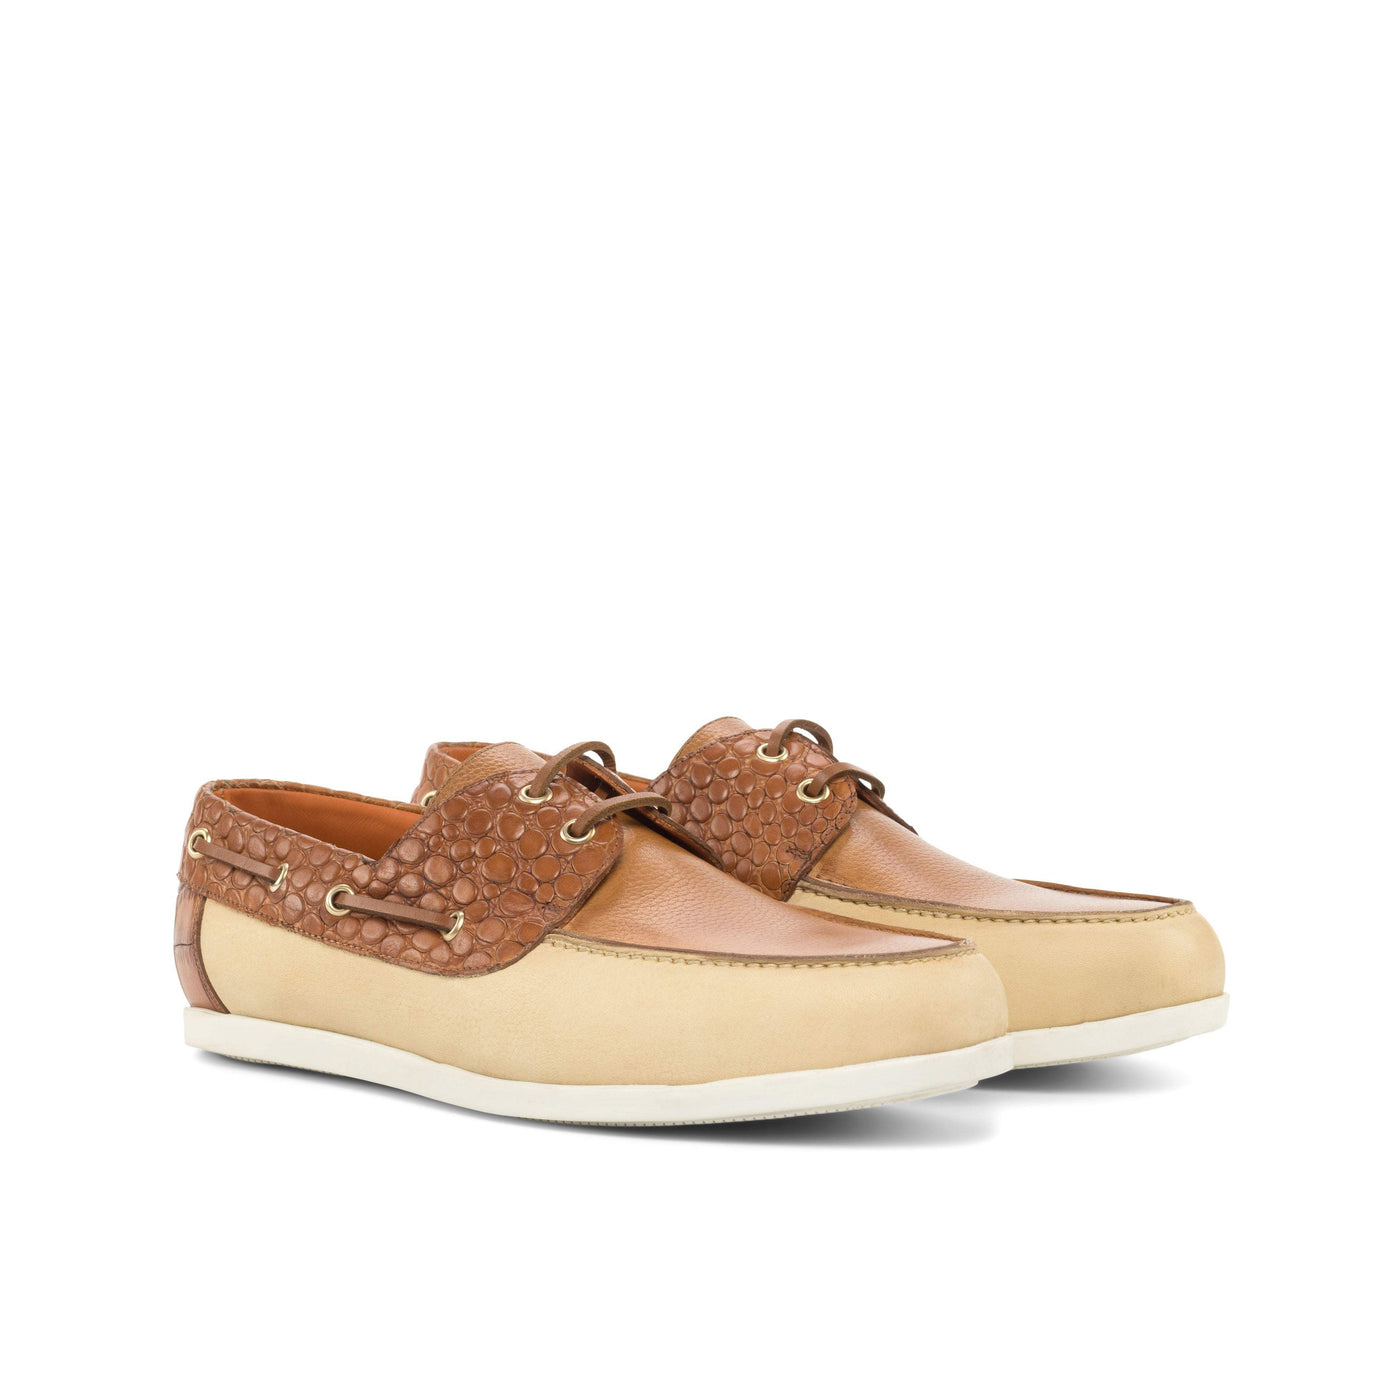 Men's Classic Boat Shoes Leather Brown White 4805 3- MERRIMIUM